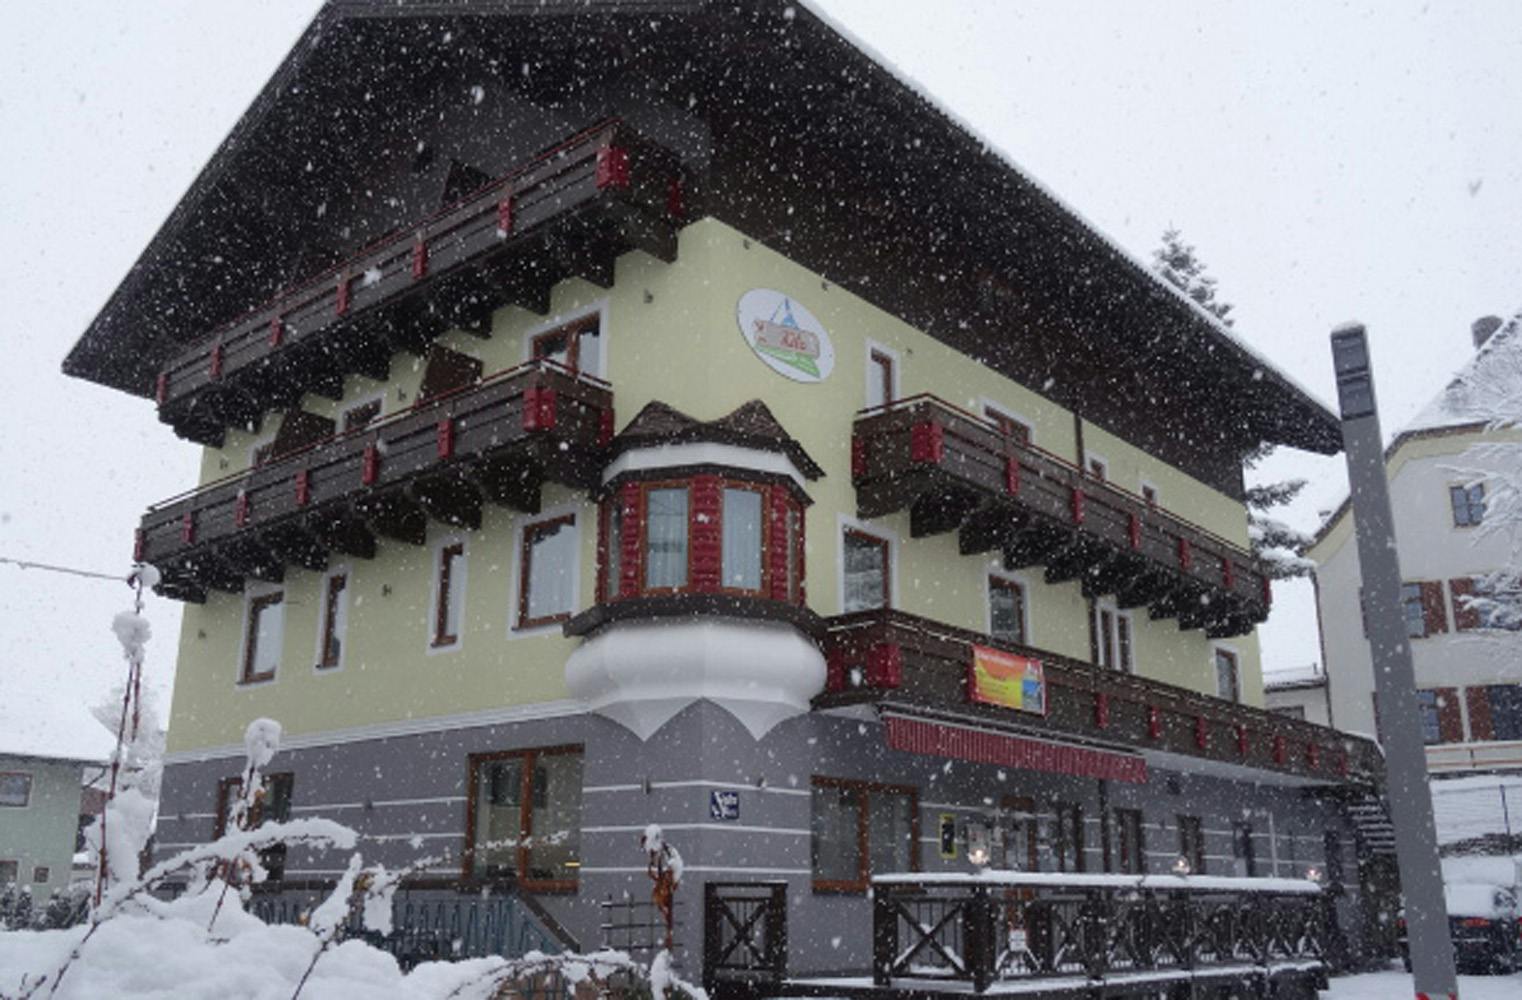 Winter-Ski-Urlaub | Schneegarantie | 4 Tage im Sporthotel